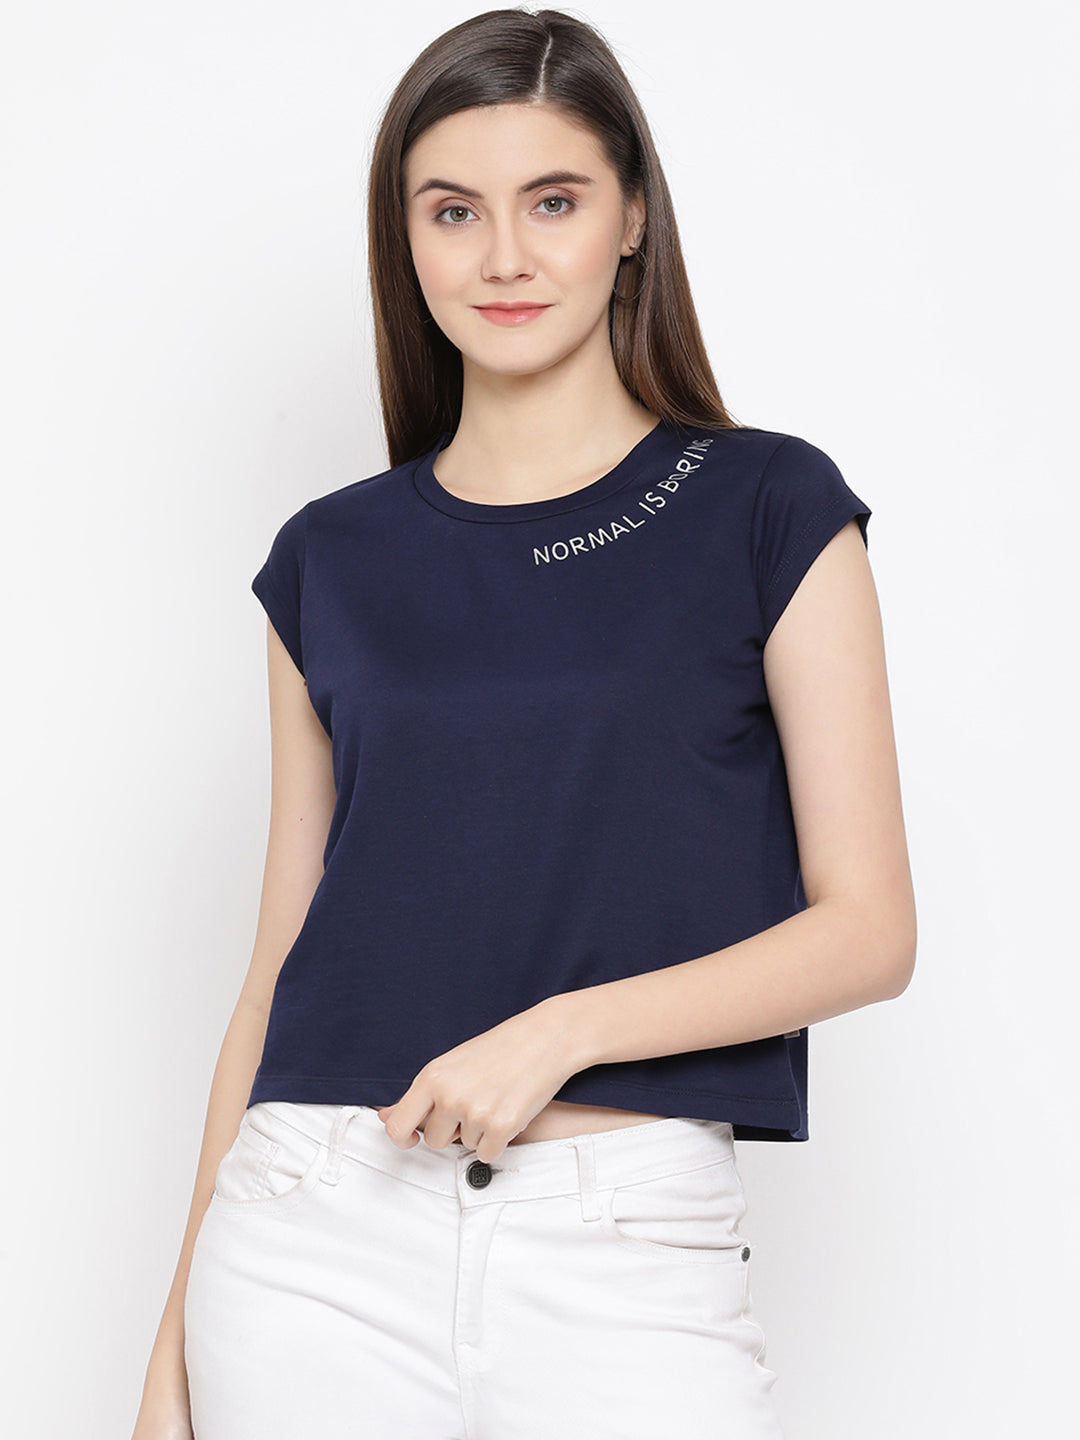 Navy Blue Printed Round Neck T-Shirt - Women T-Shirts